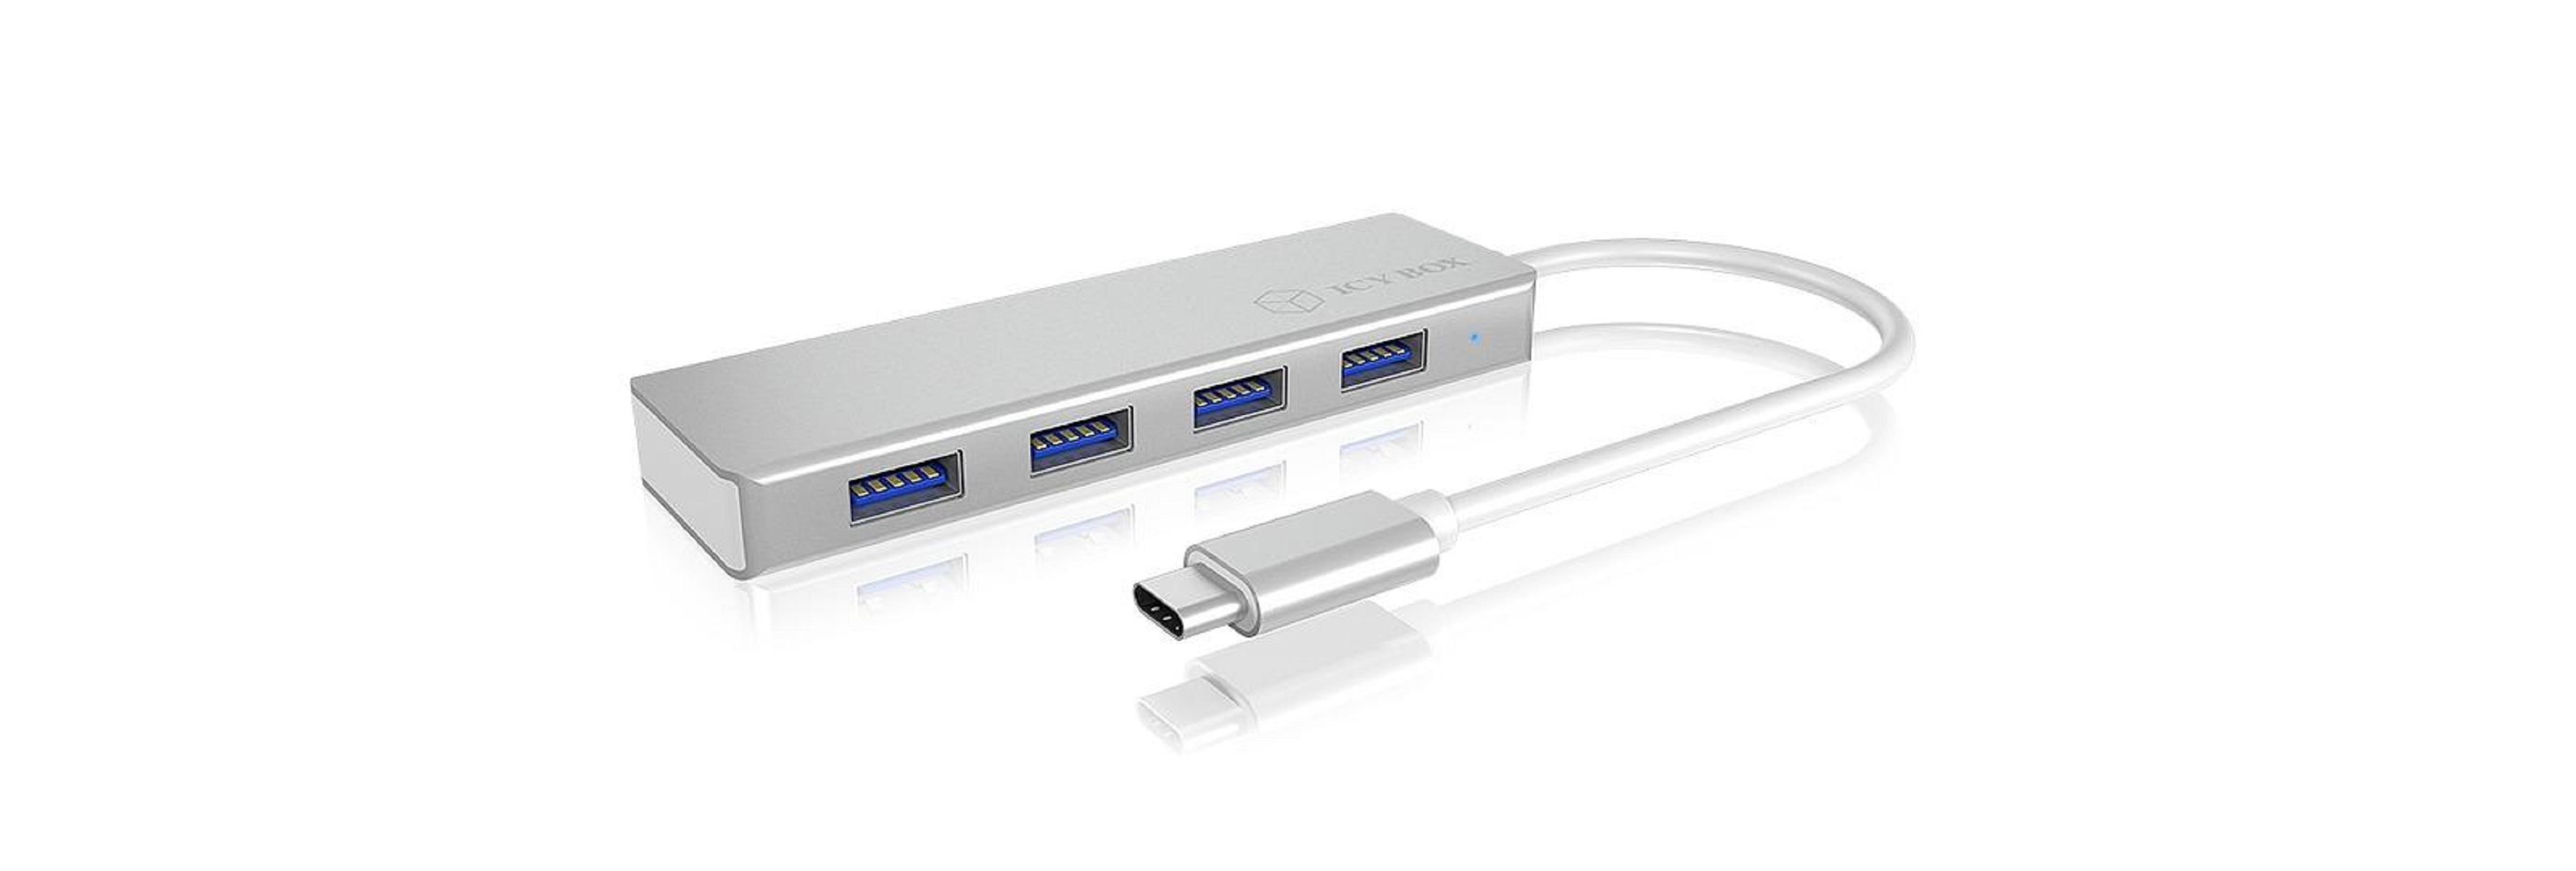 USB Silber Hub, RAIDSONIC Verteiler, IB-HUB1425-C3 USB